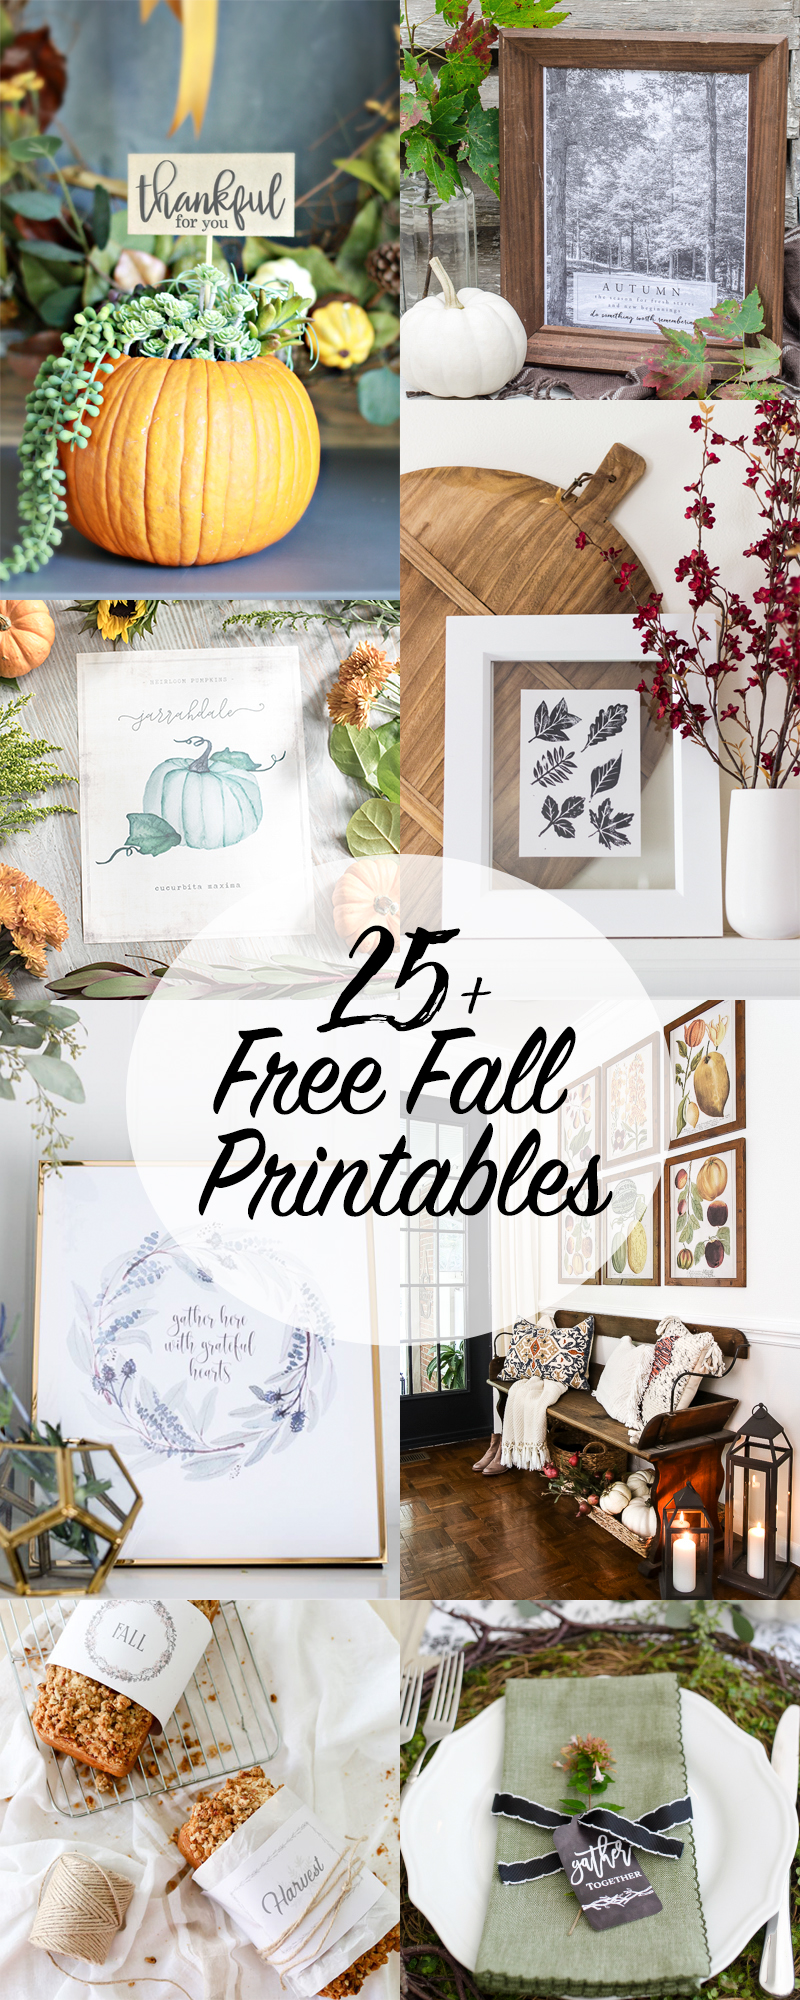 Free Fall Printables poster.